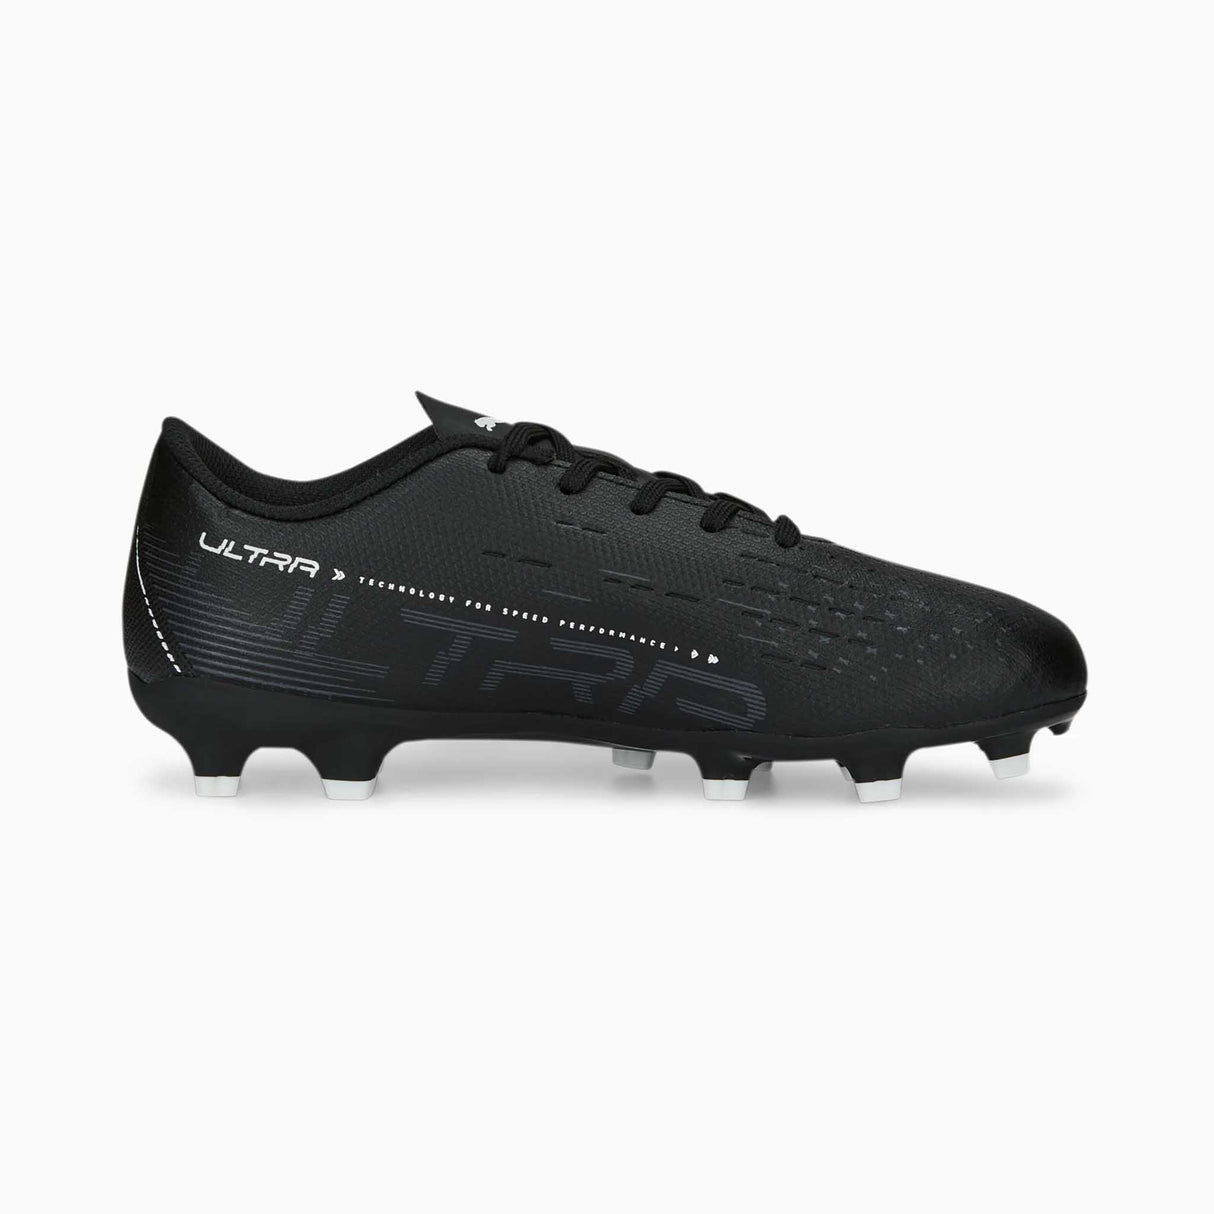 Puma Ultra Play FG/AG souliers soccer crampons enfant lateral- noir